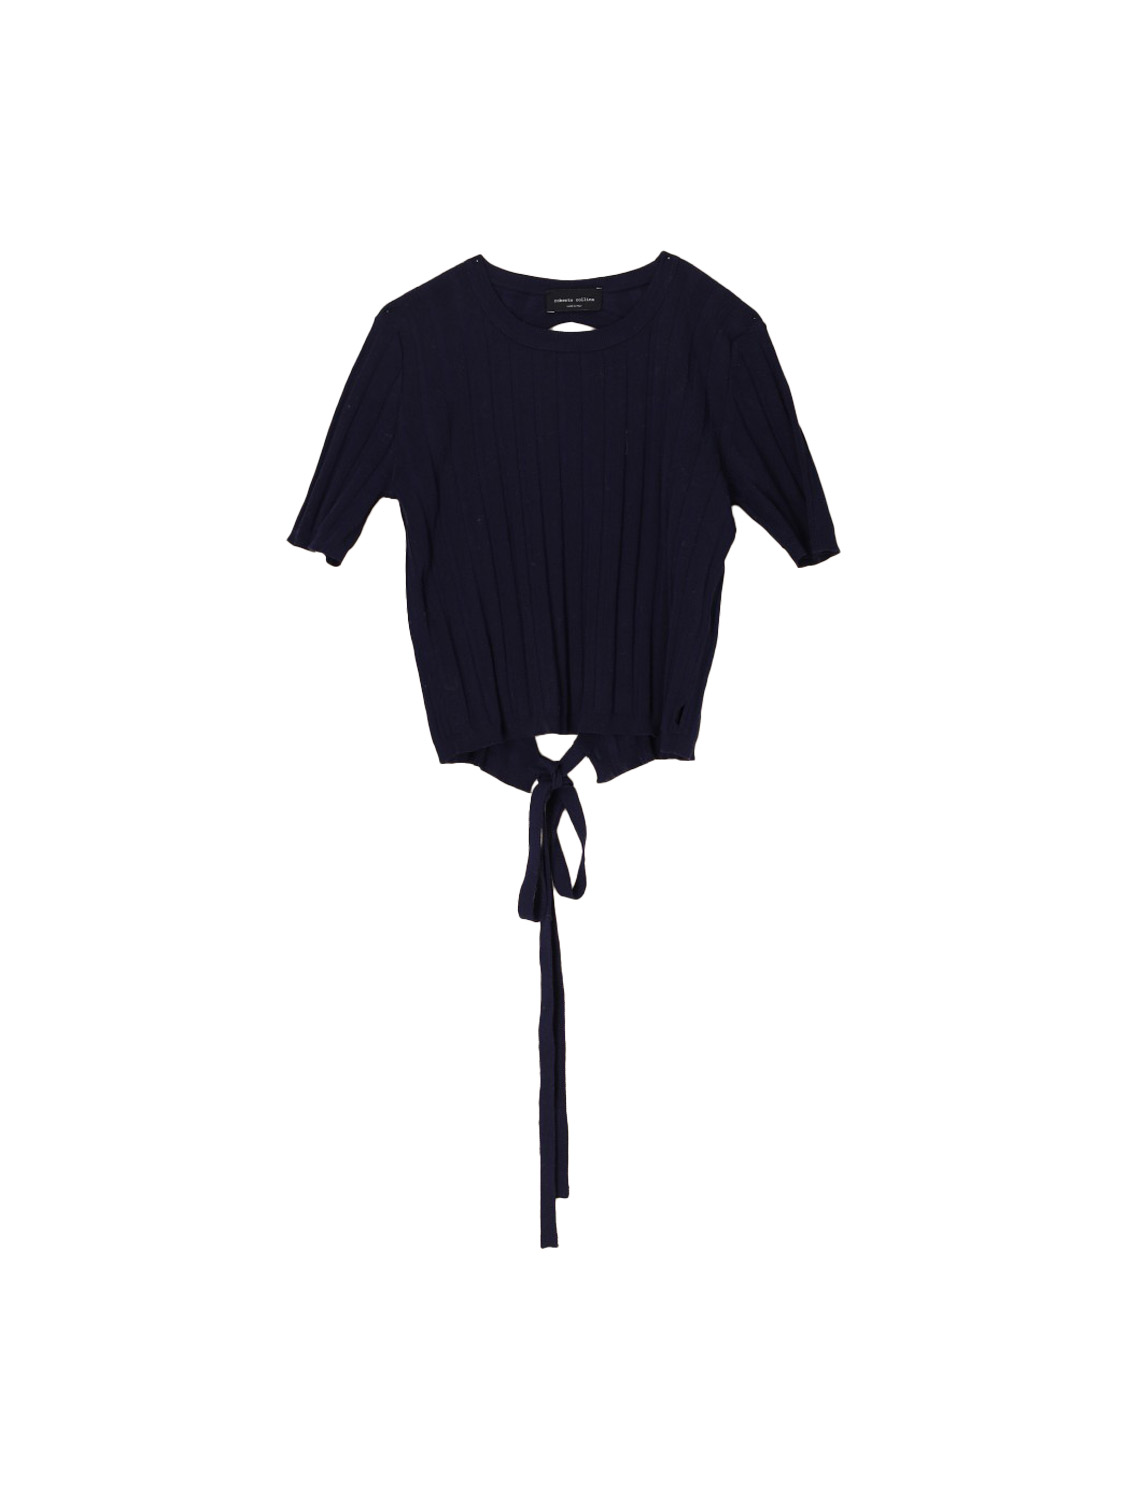 MC Schiena – cotton shirt with a wide back neckline 